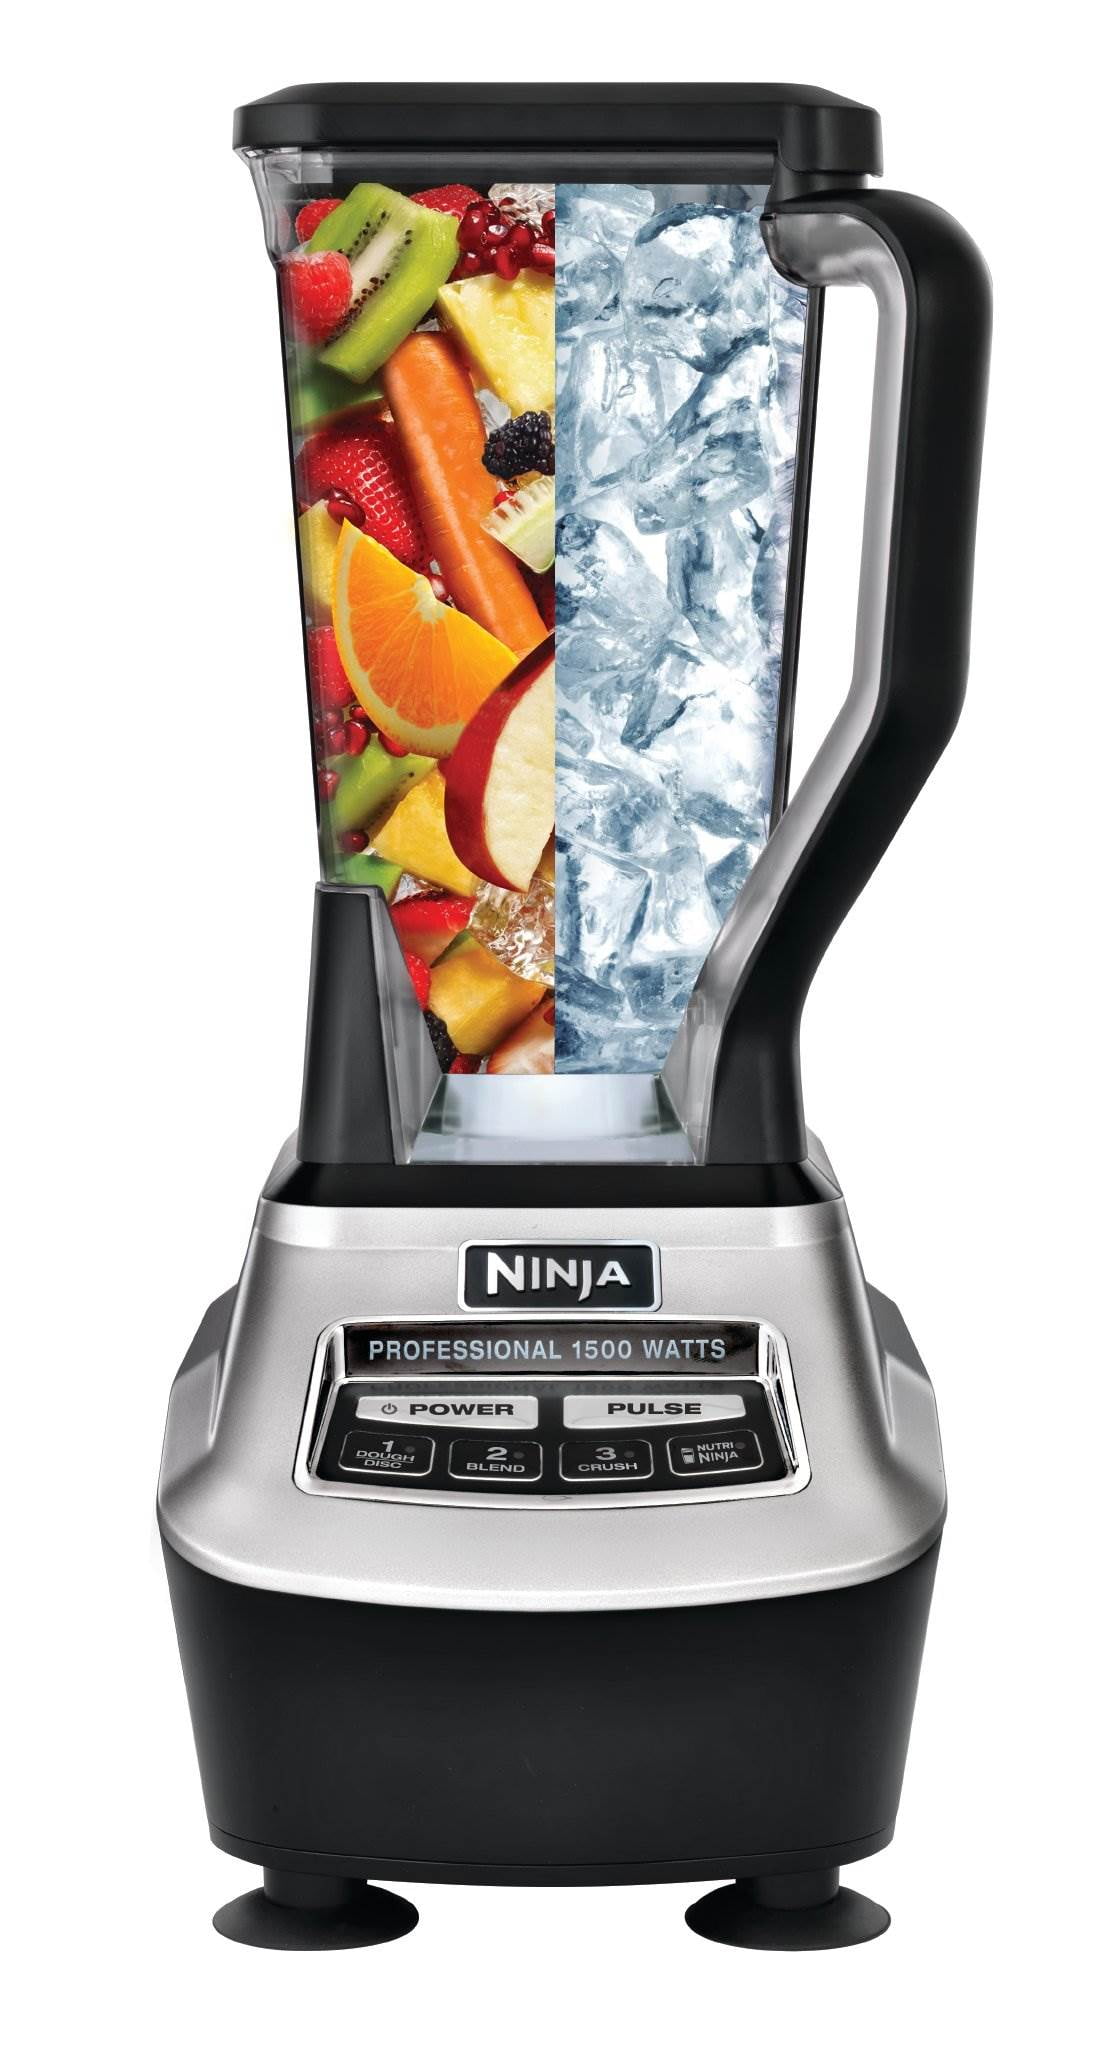 Unboxing & Reviewing New NINJA Mega Kitchen System 1500 ~ Blender, Food  Processor & 2 Nutri Cups 